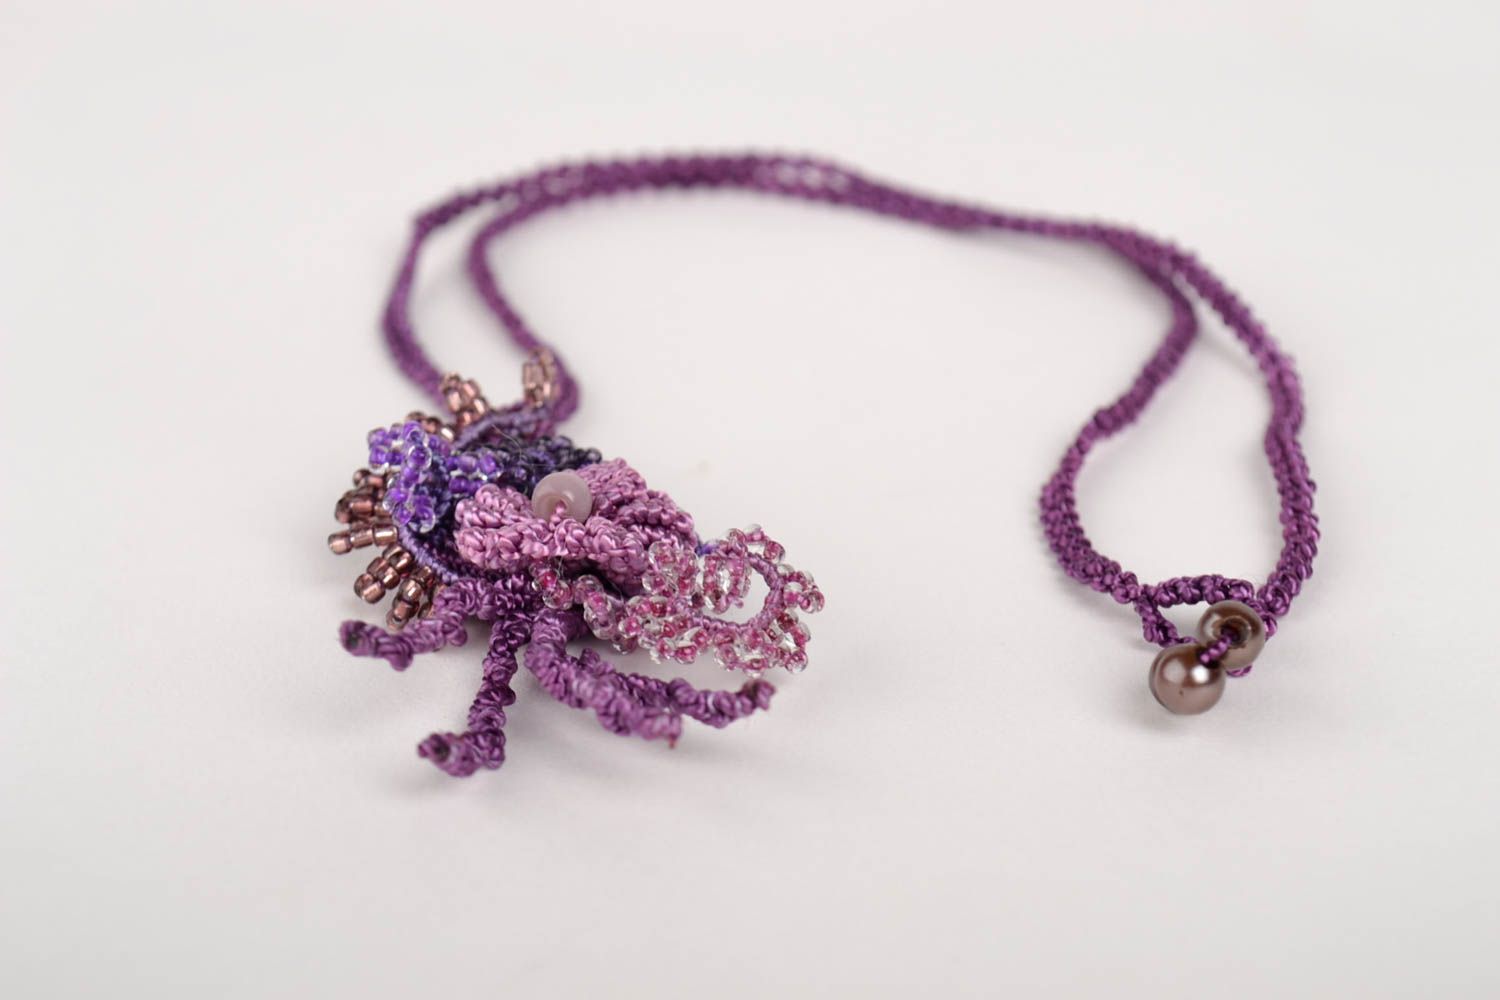 Woven pendant handmade thread jewelry macrame bijouterie gift for women photo 3